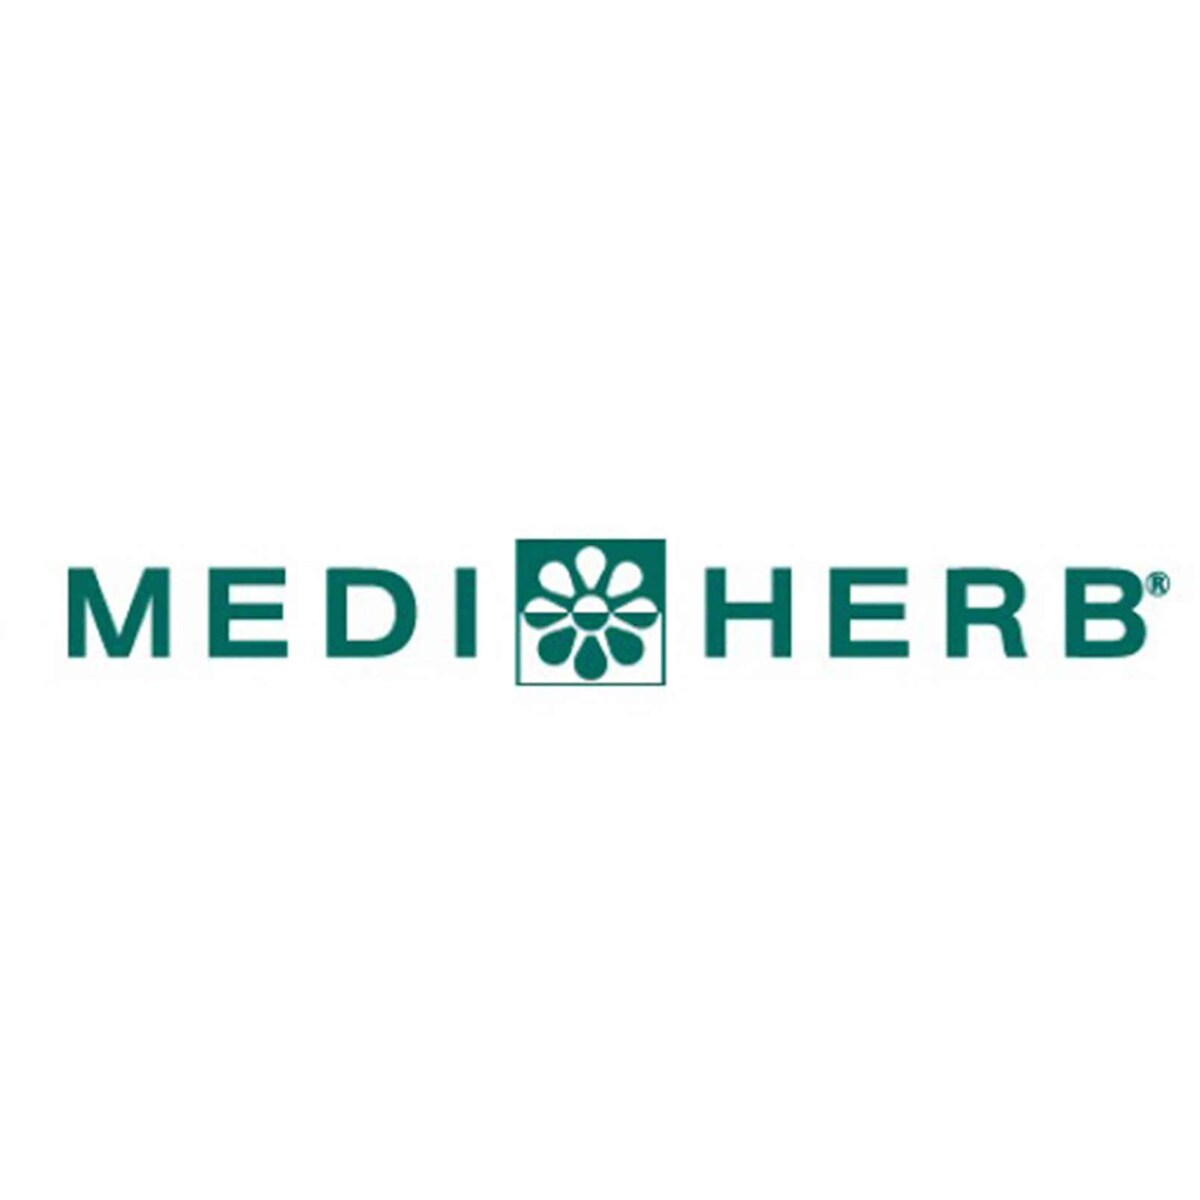 MediHerb HiPep 60 Tablets